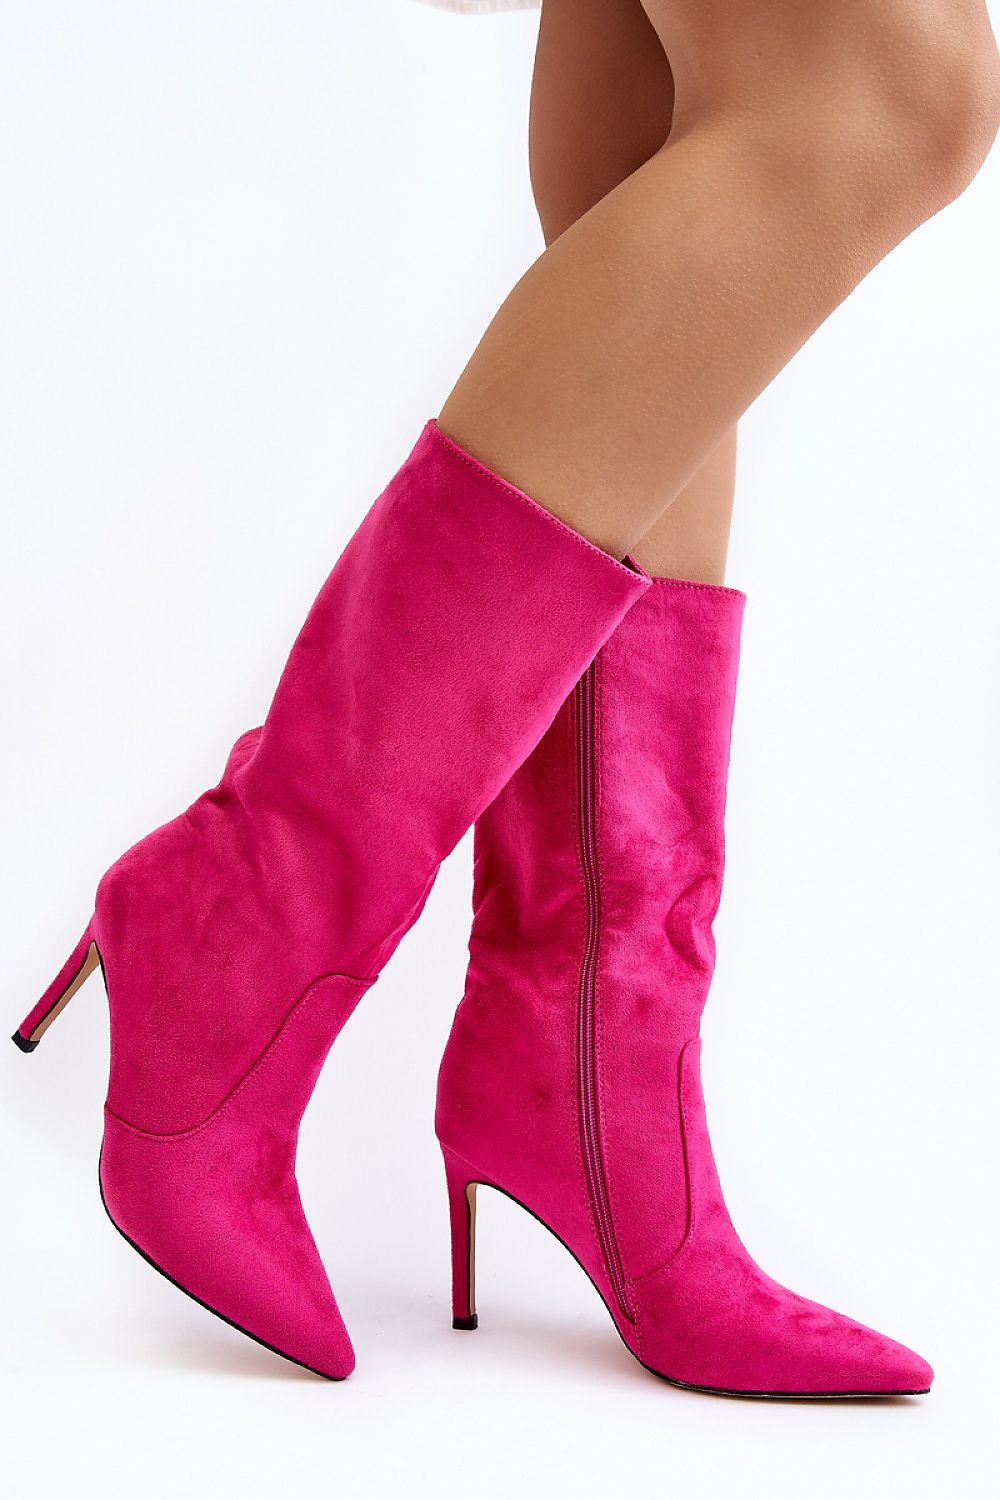 Women's Step in Style Fuchsia High Heel Boots